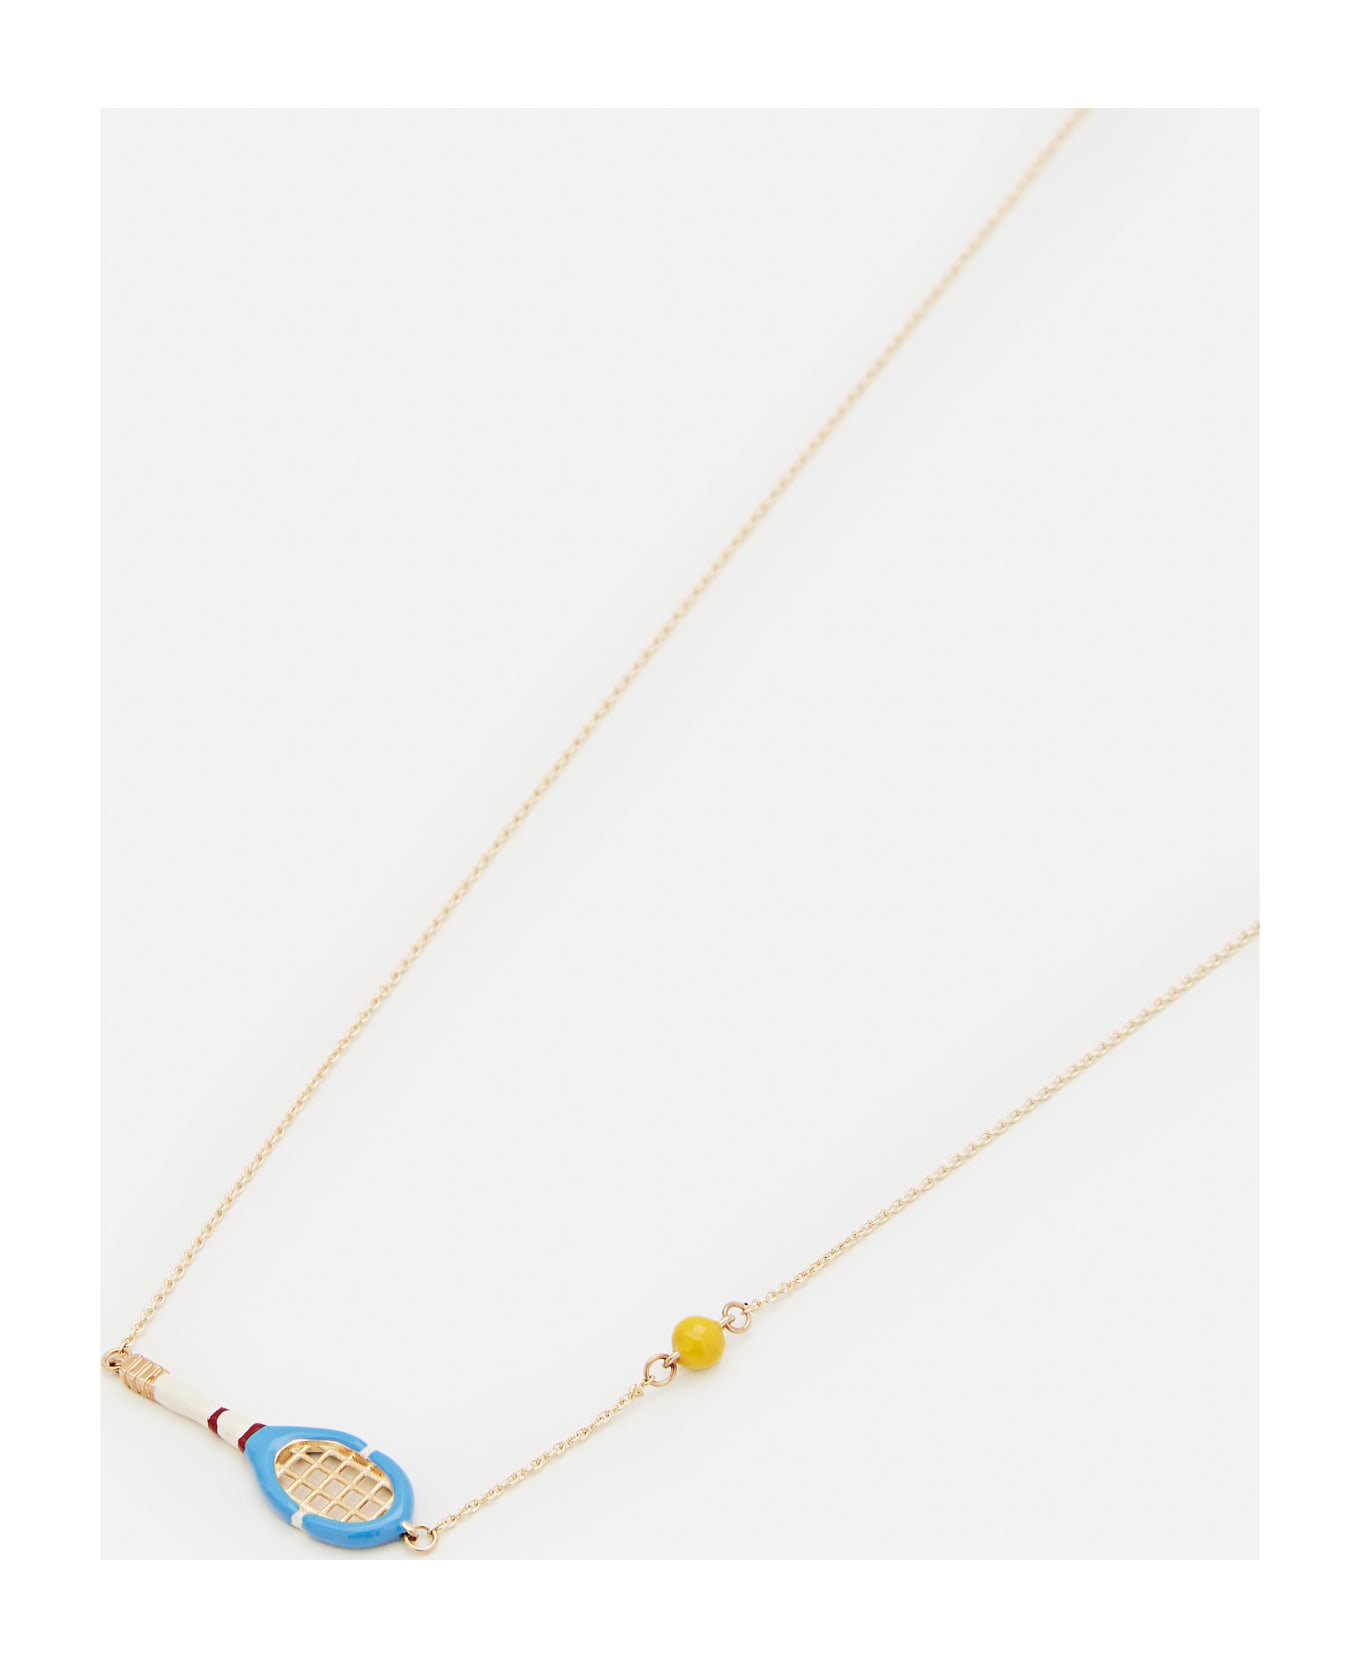 Aliita 9k Gold Tennis Pelota Polished Necklace - Clear Blue